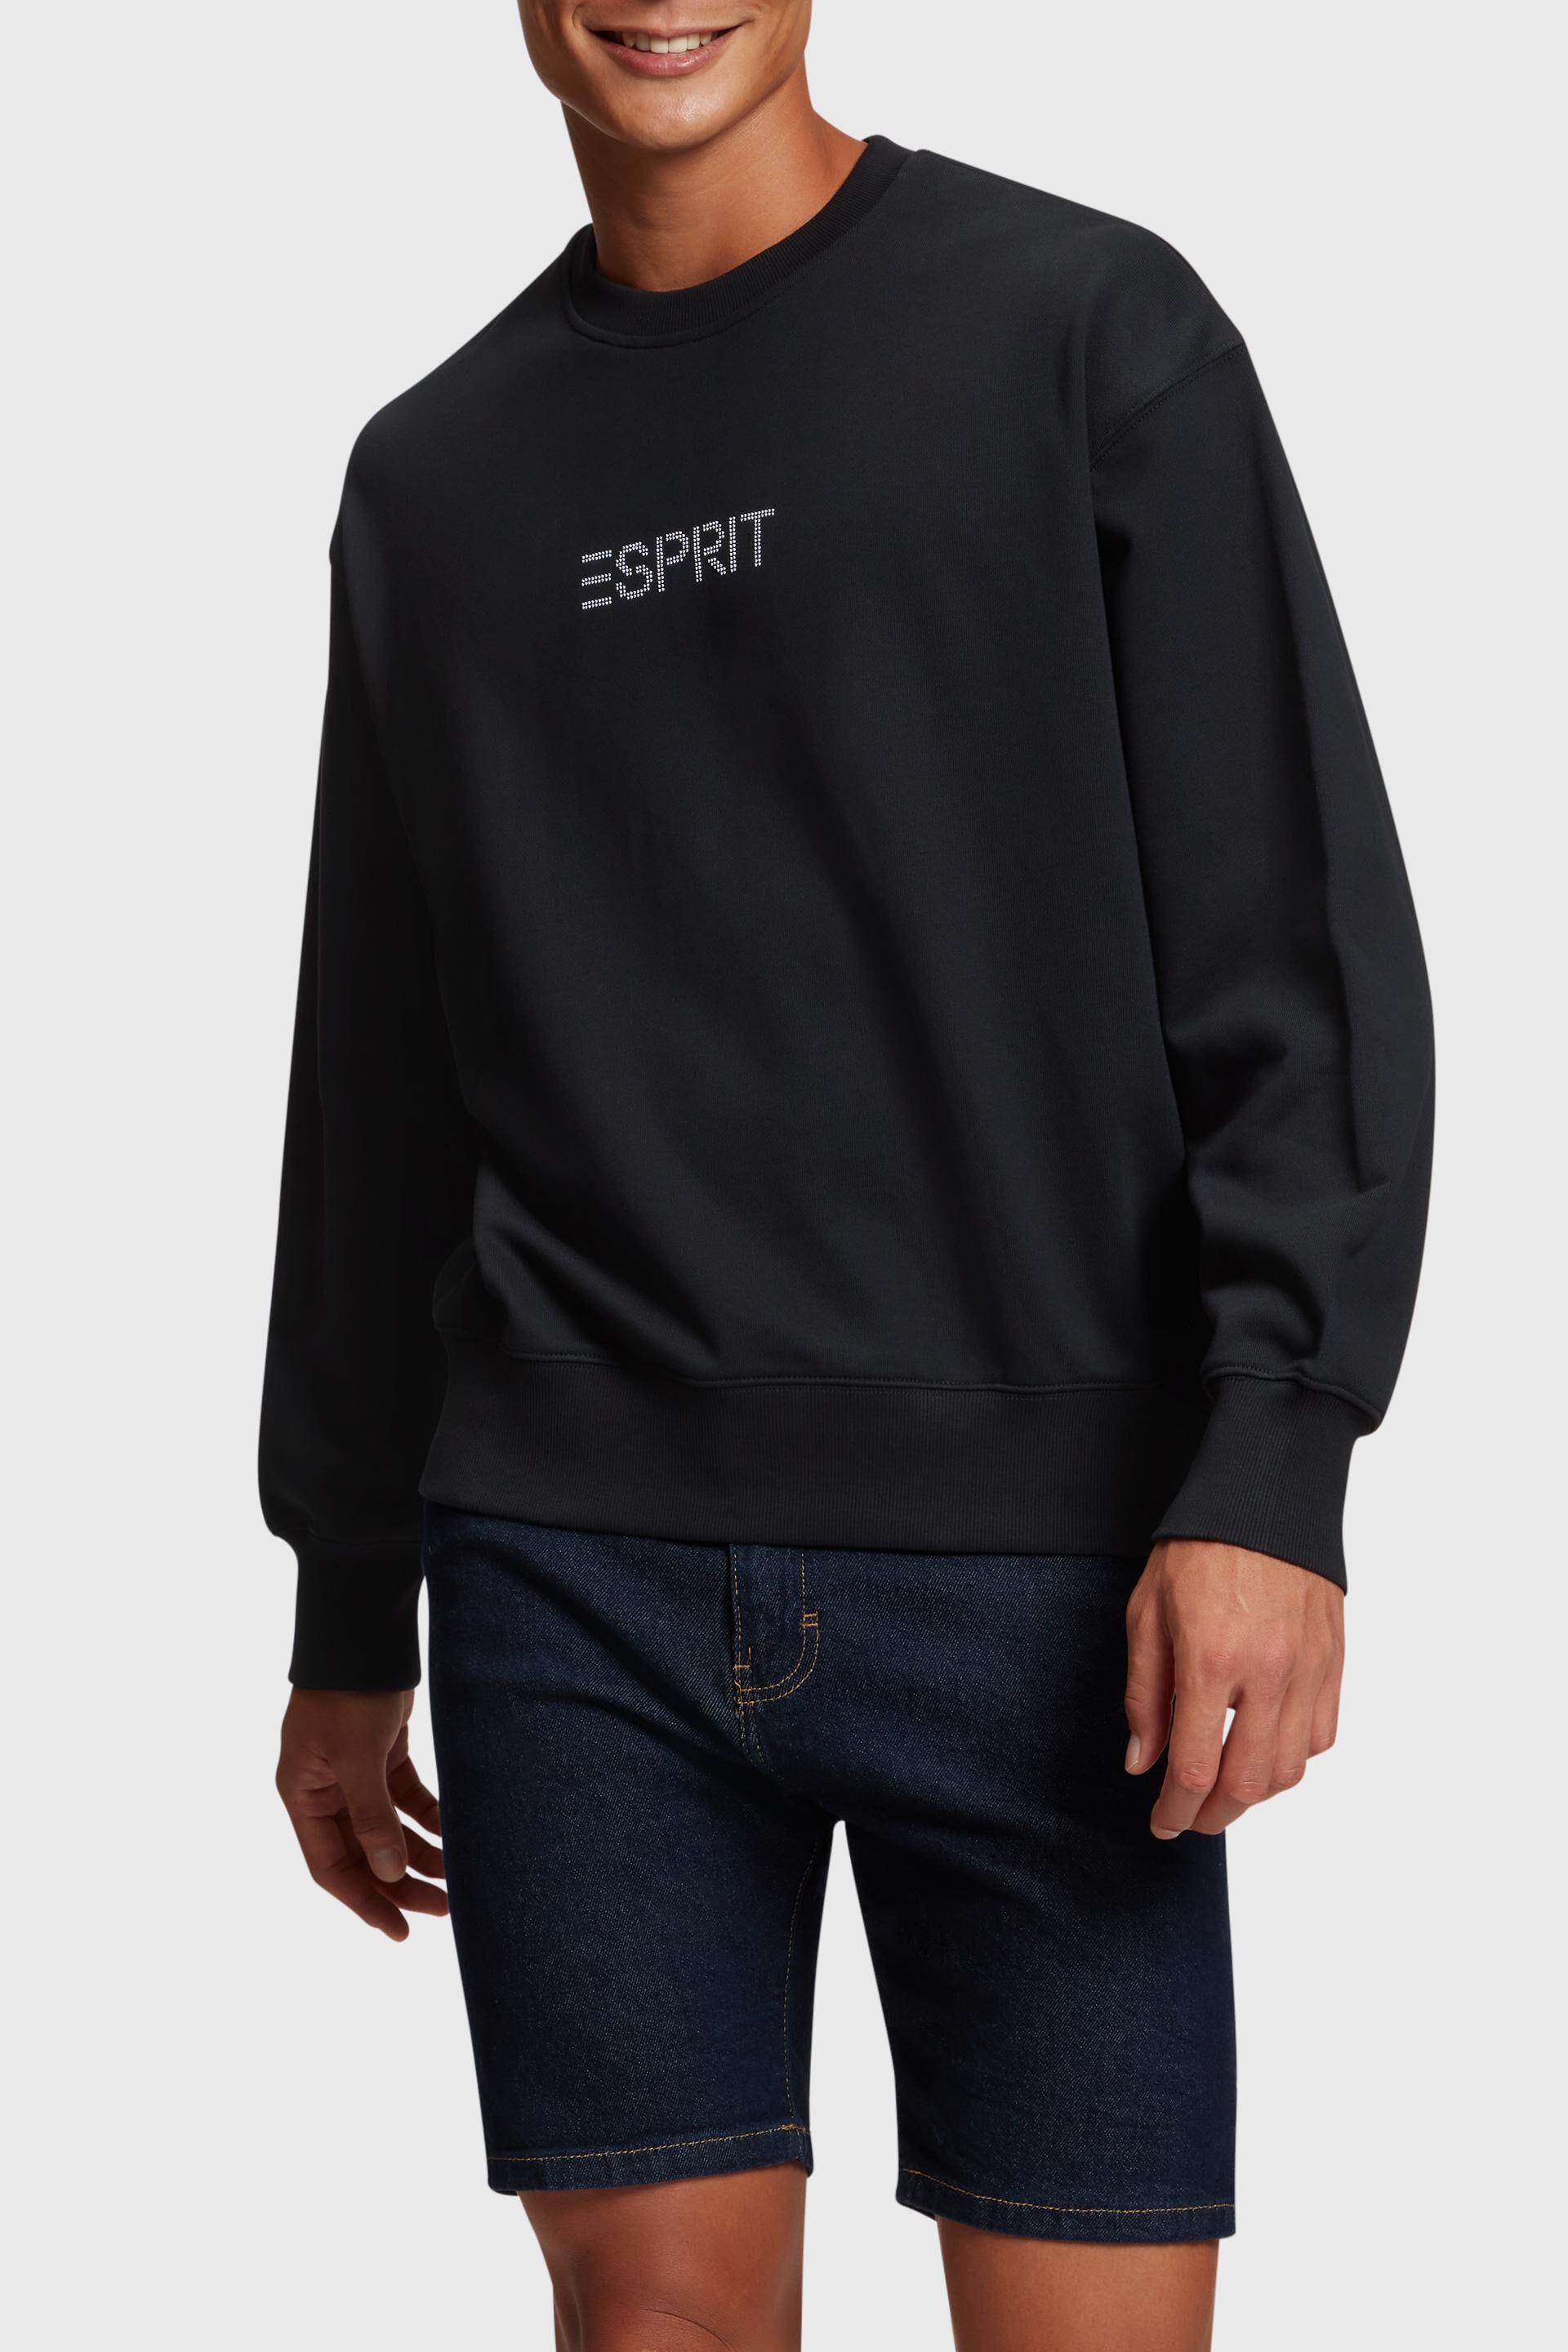 Esprit sweatshirt applique logo Stud